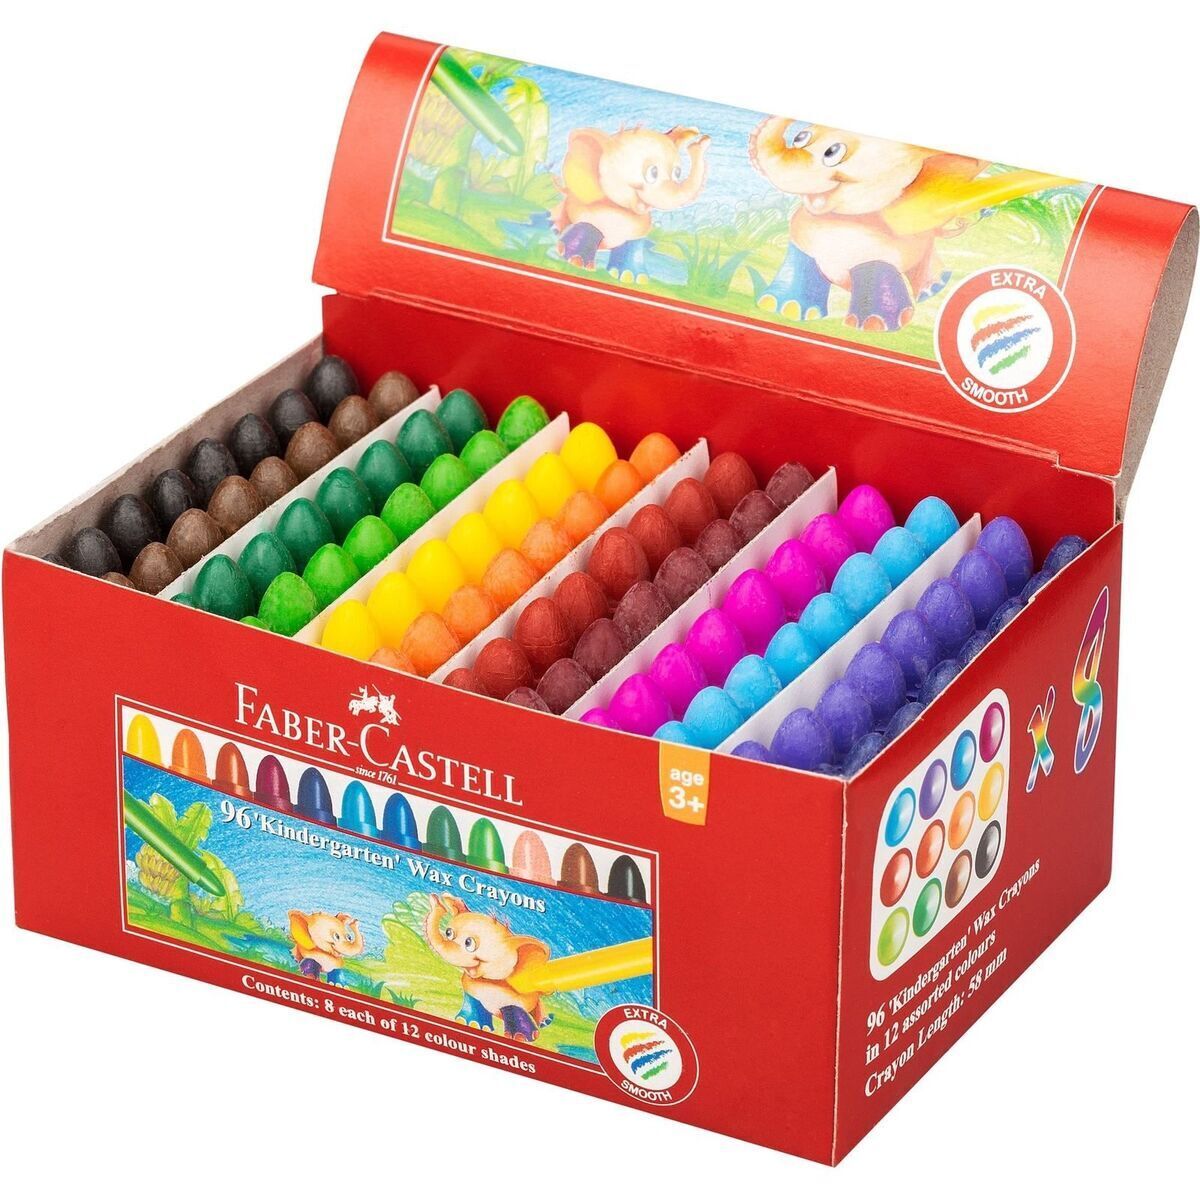 FABER-CASTELL Kindergarten Wax Crayons Assorted Box of 96